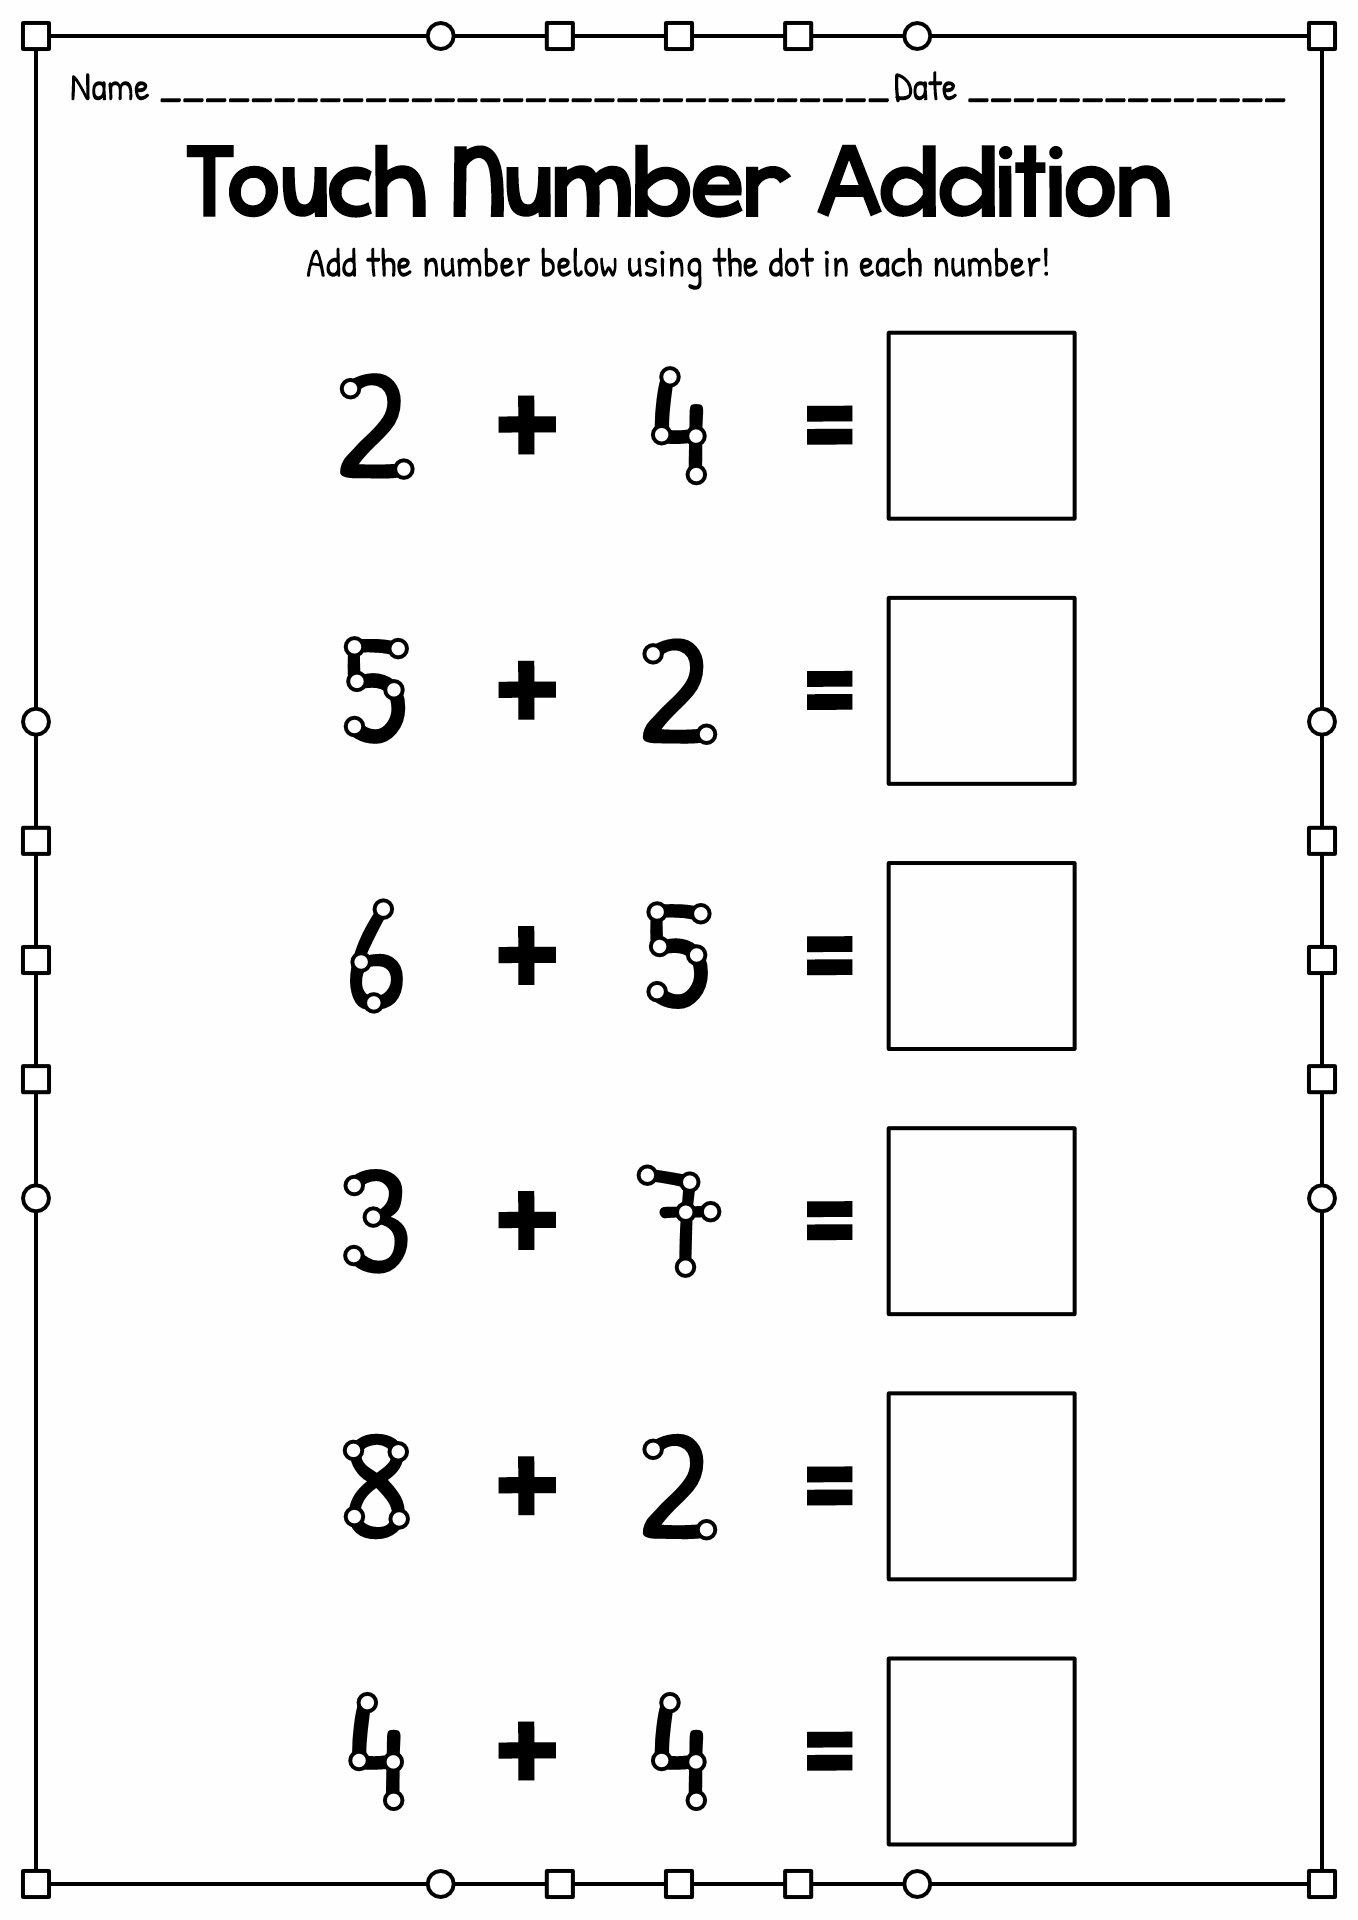 12-best-images-of-dice-math-worksheets-dice-addition-worksheets-937